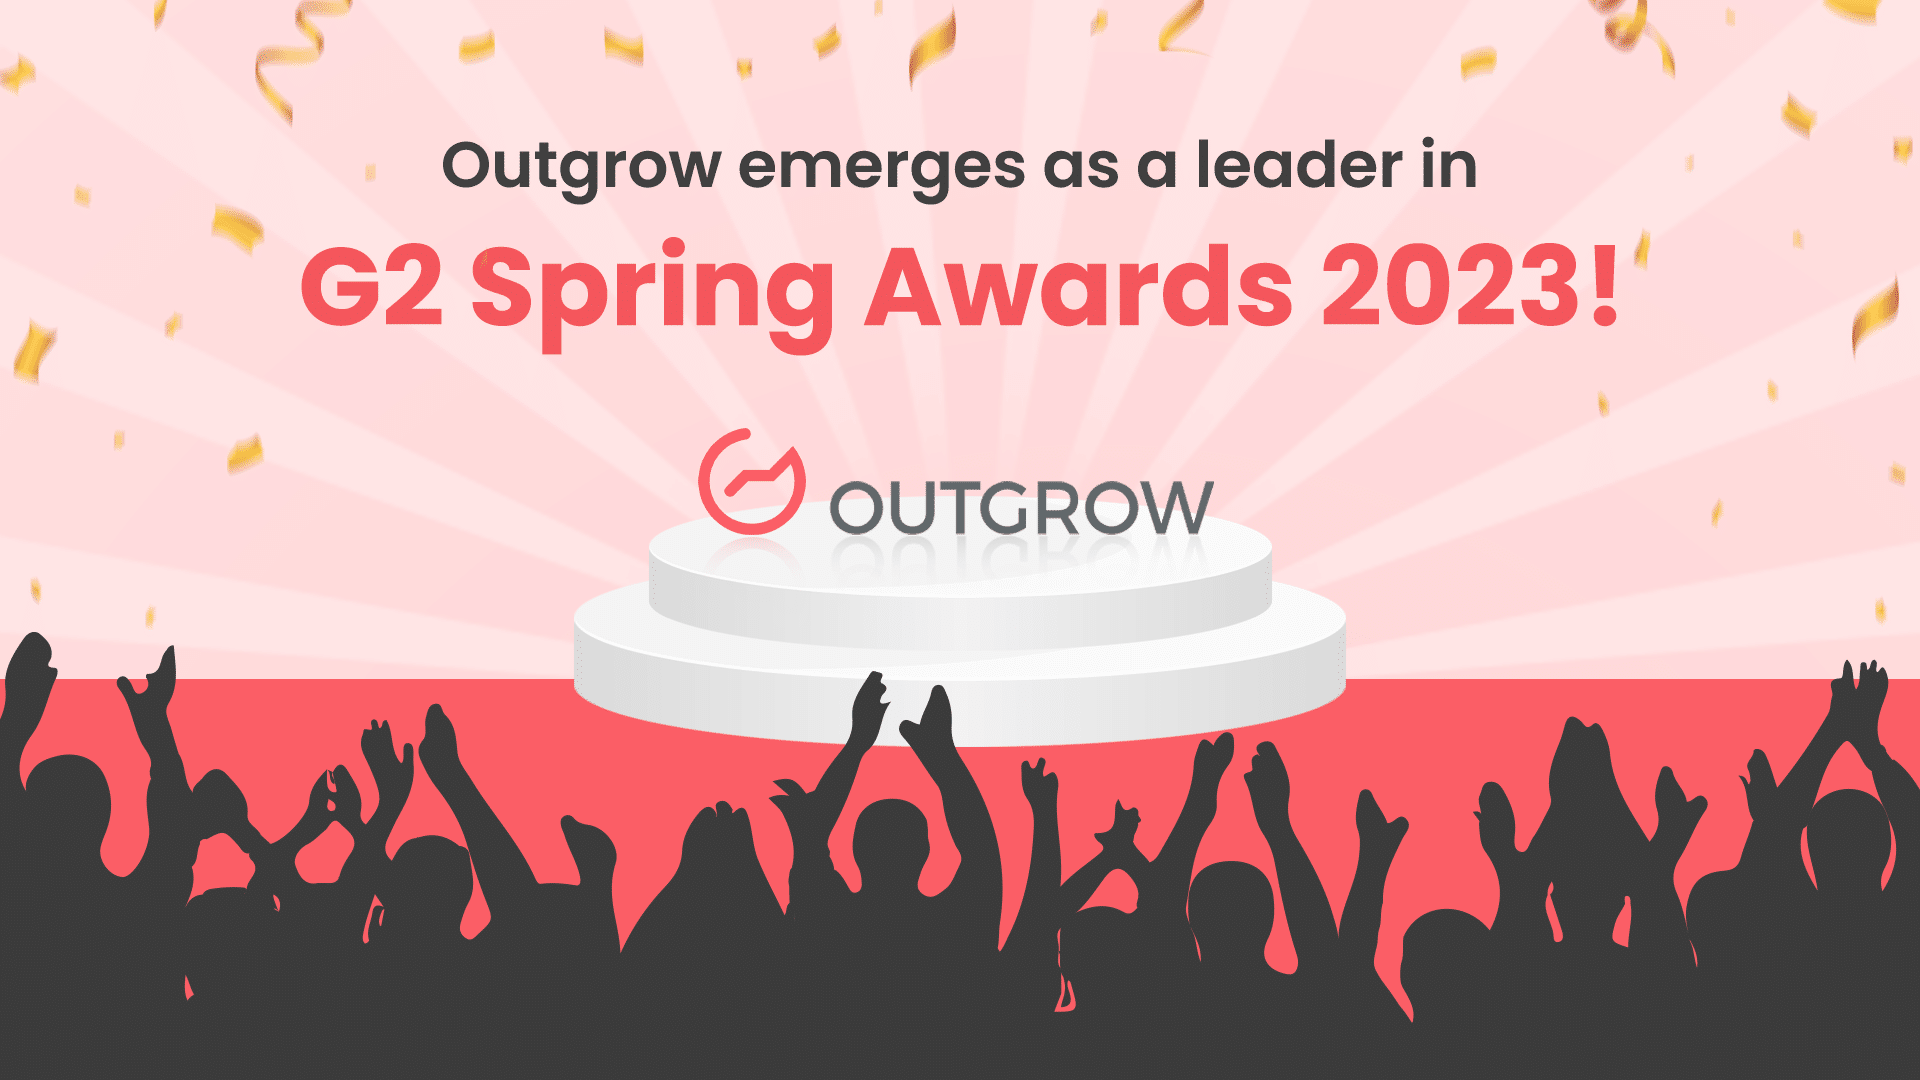 Outgrow wins G2 Spring Awards 2023